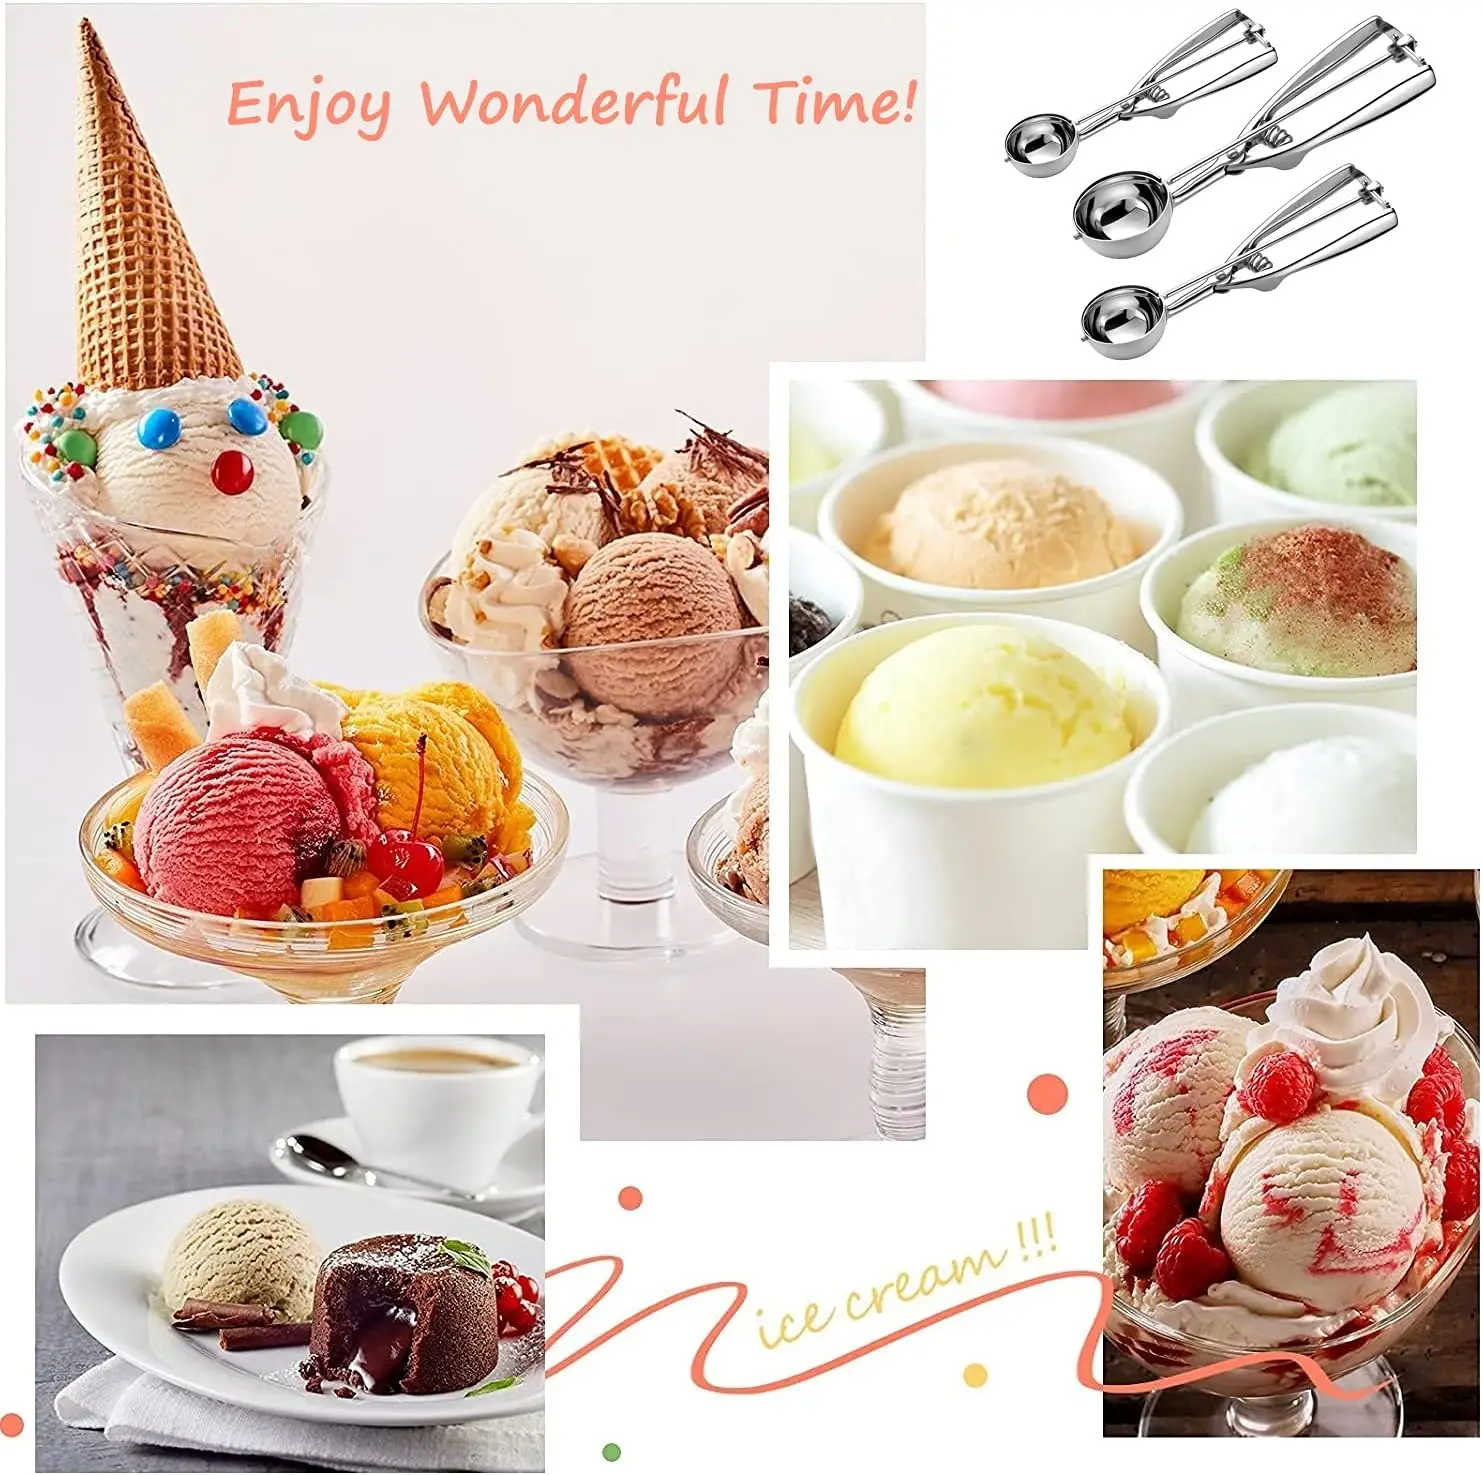 https://ae01.alicdn.com/kf/S8f732ec2a4194934910f40dd07562133v/Ice-Cream-Scoop-3Pcs-Cookie-Scoop-Set-Stainless-Steel-Ice-Cream-Scooper-with-Trigger-Release-S.jpg